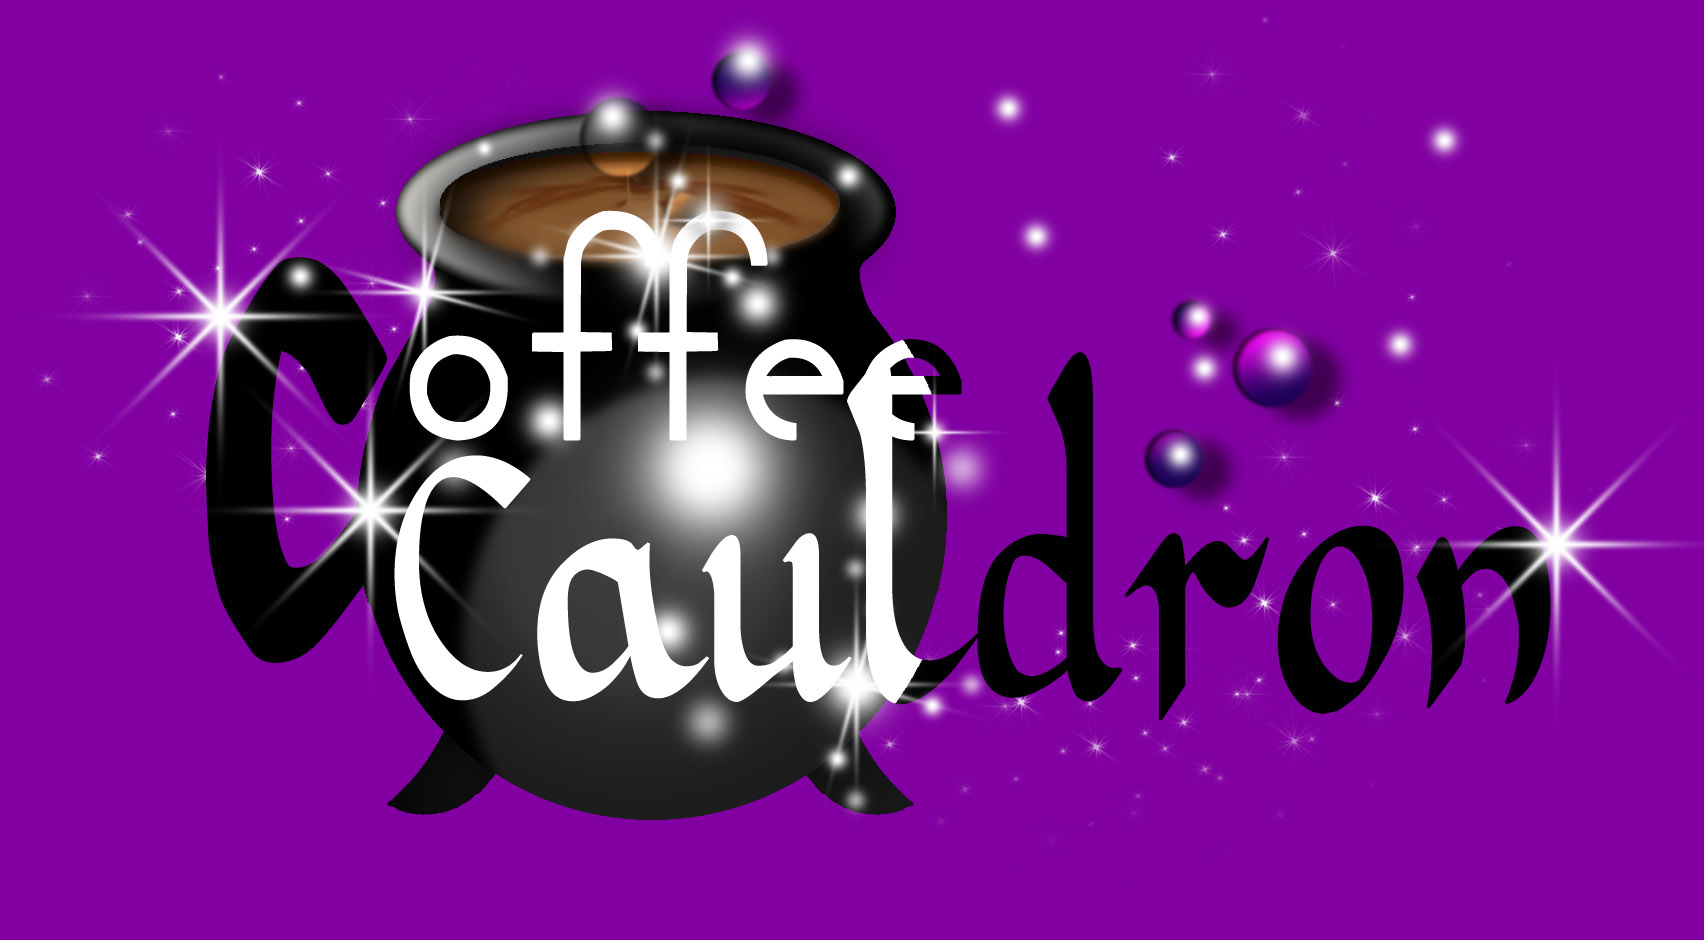 Coffee Cauldron